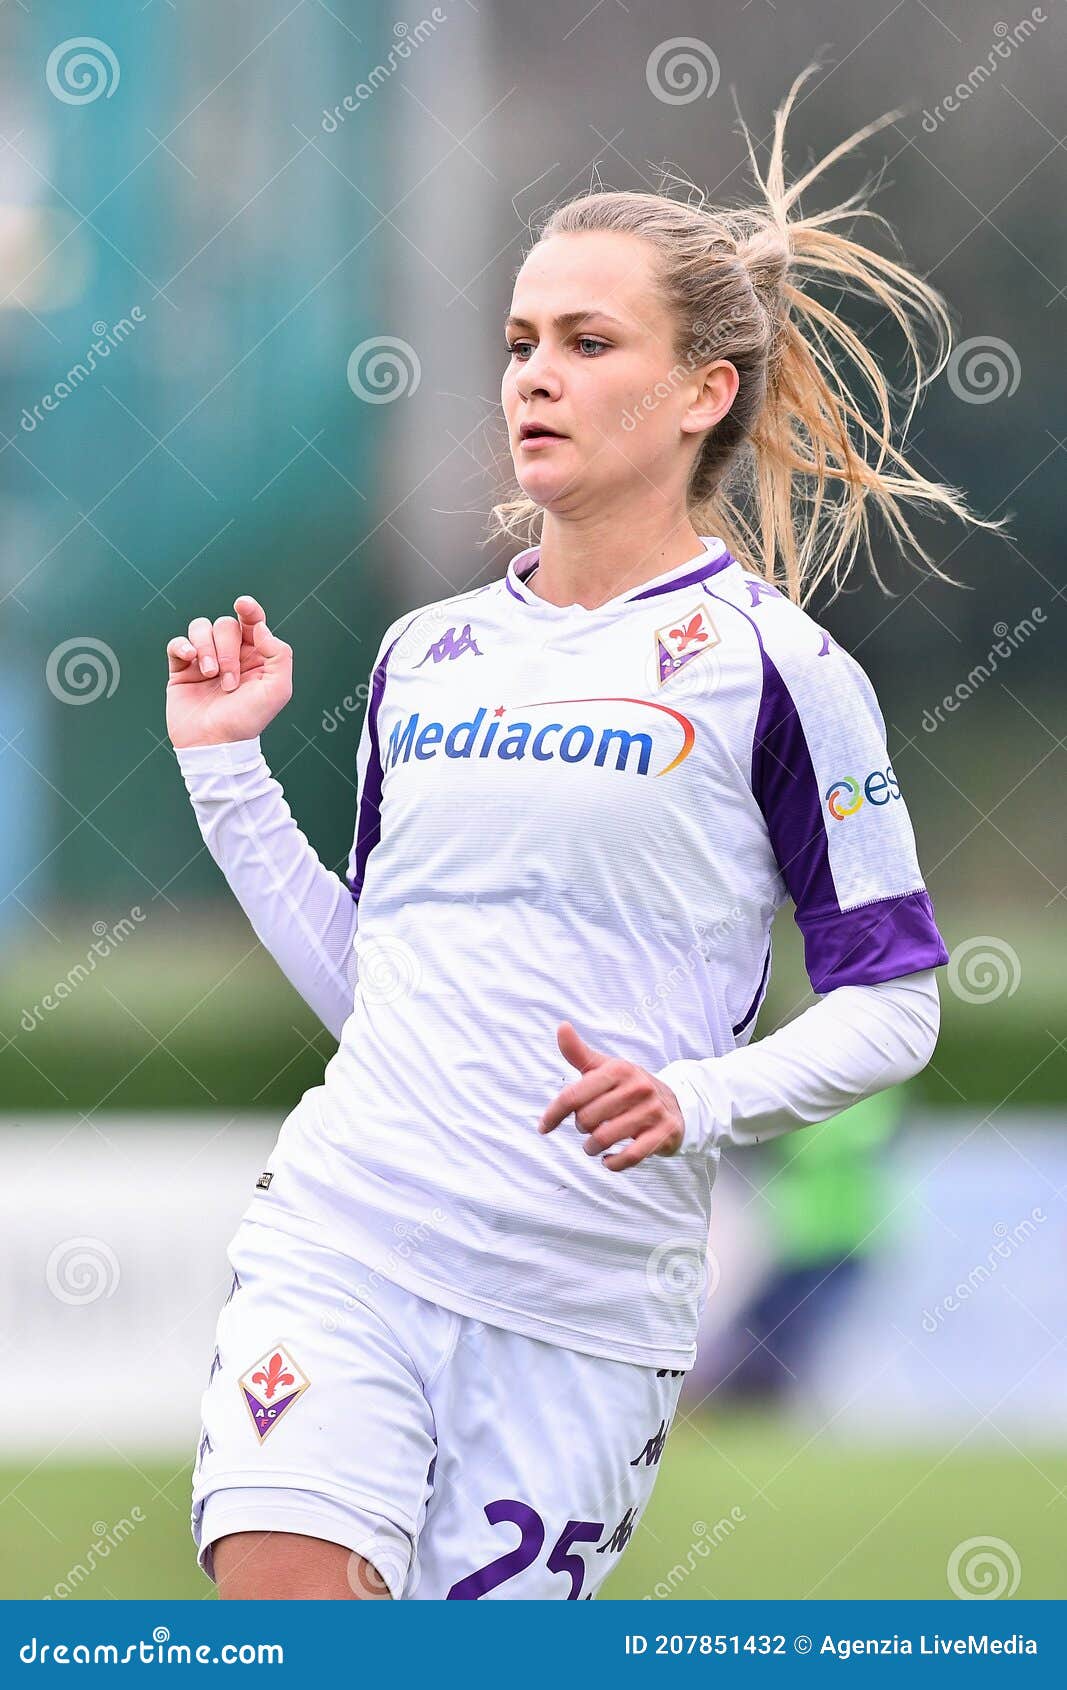 ACF Fiorentina Femminile Vs San Marino Academy Editorial Image - Image of  lisa, highest: 207770540